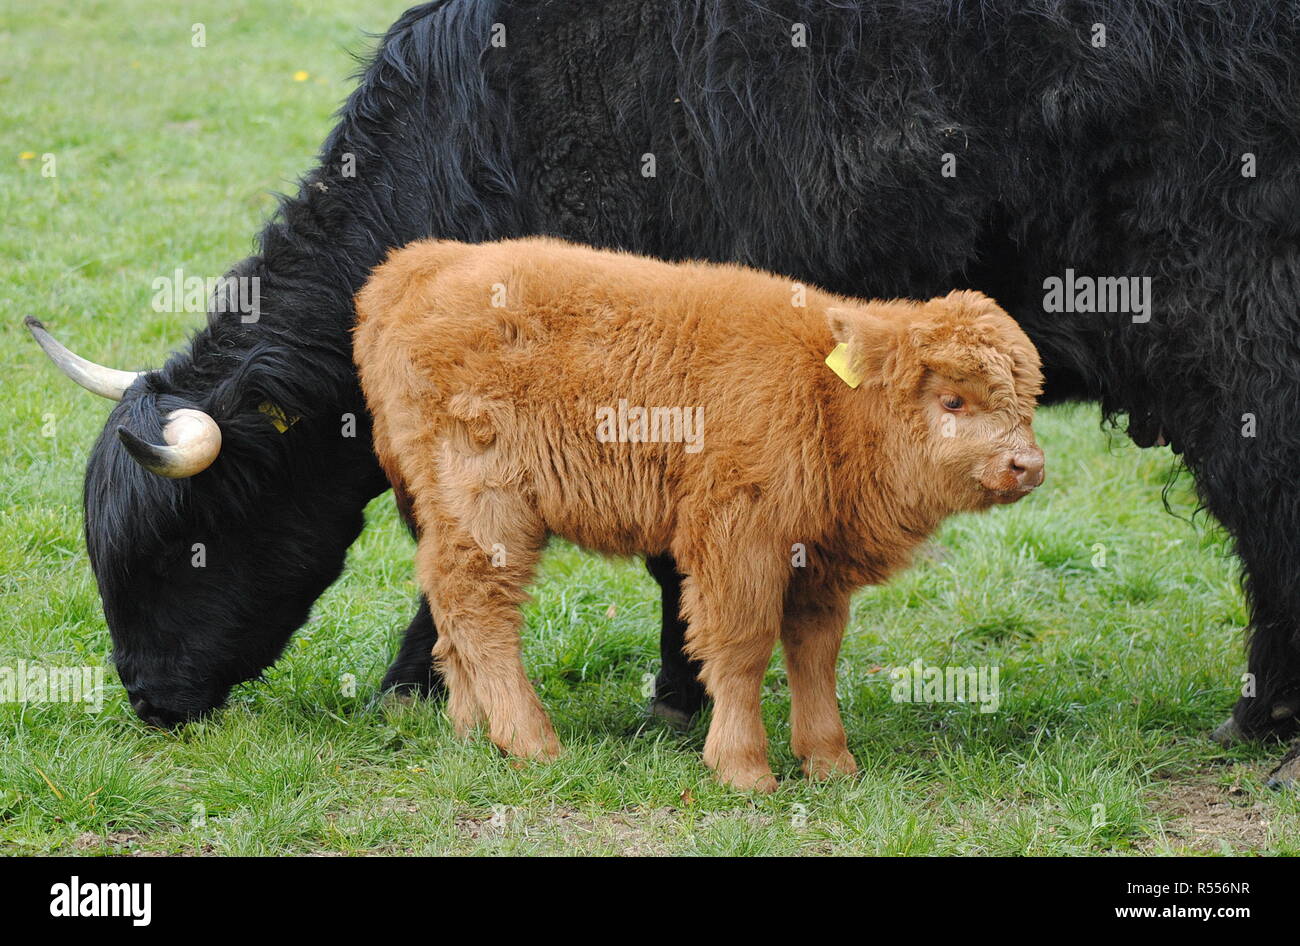 Scottish Highland cattle : Mère et enfant Banque D'Images